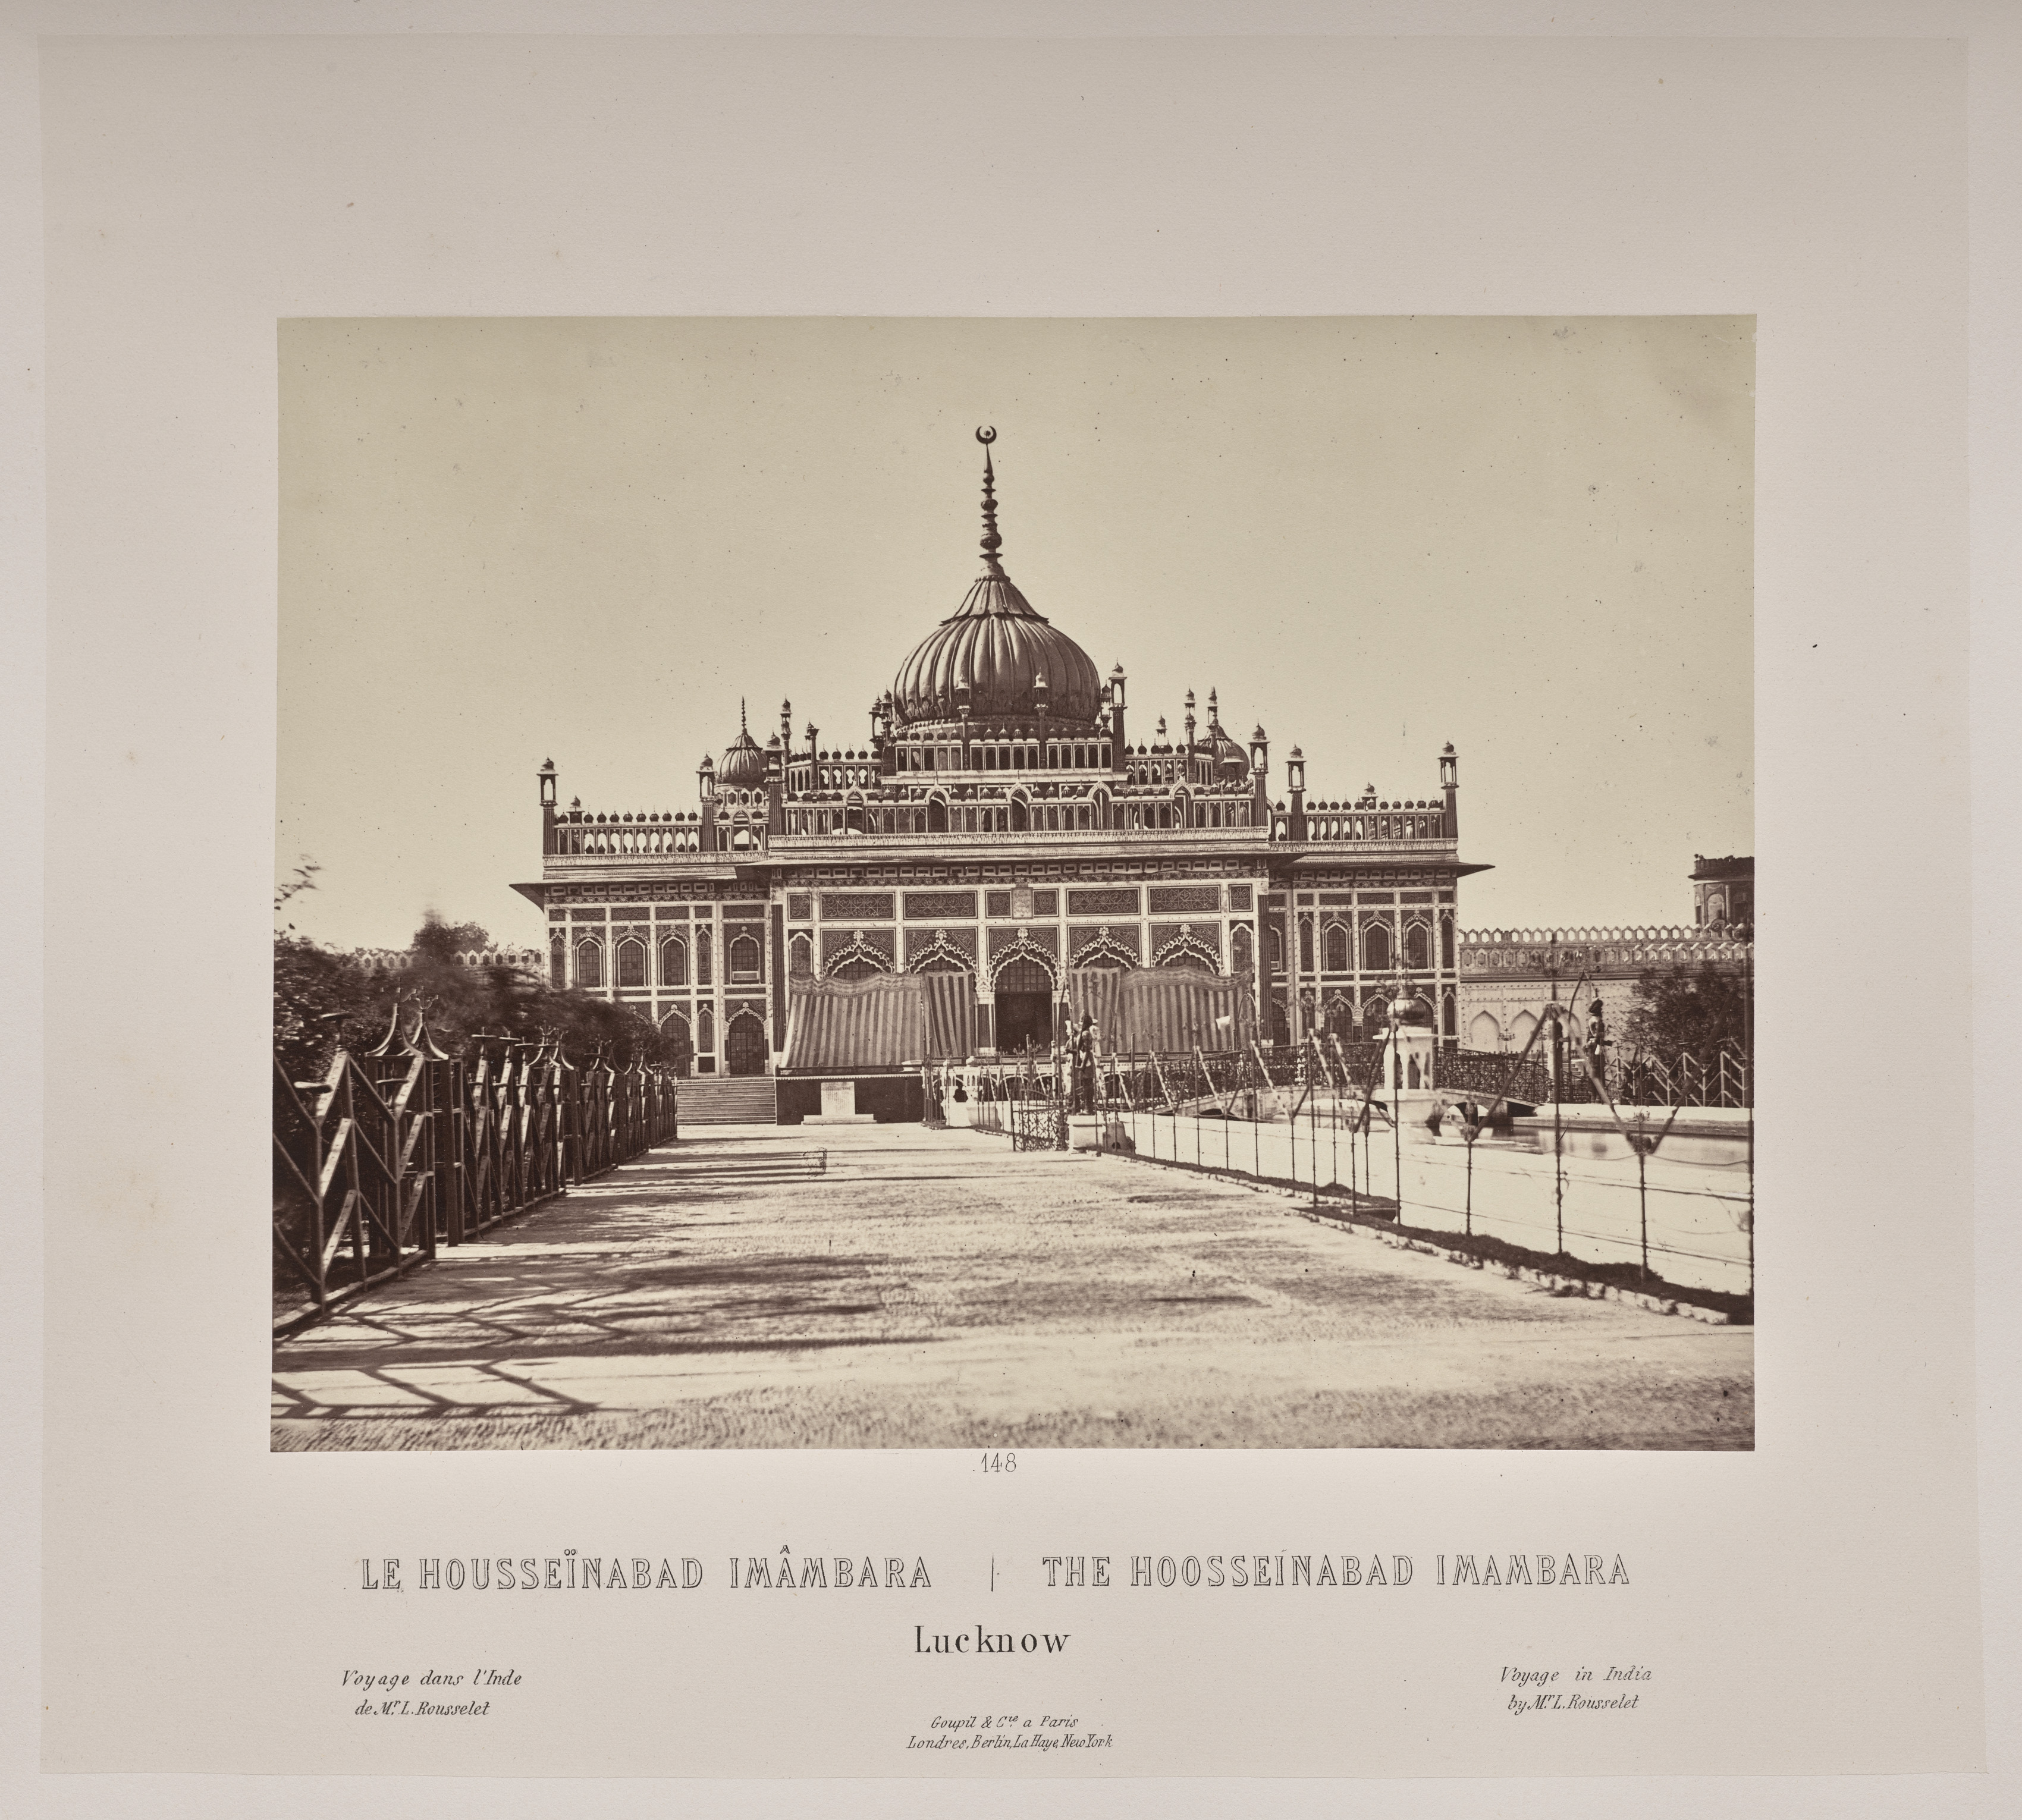 The Hoosseinabad Imambara, Lucknow